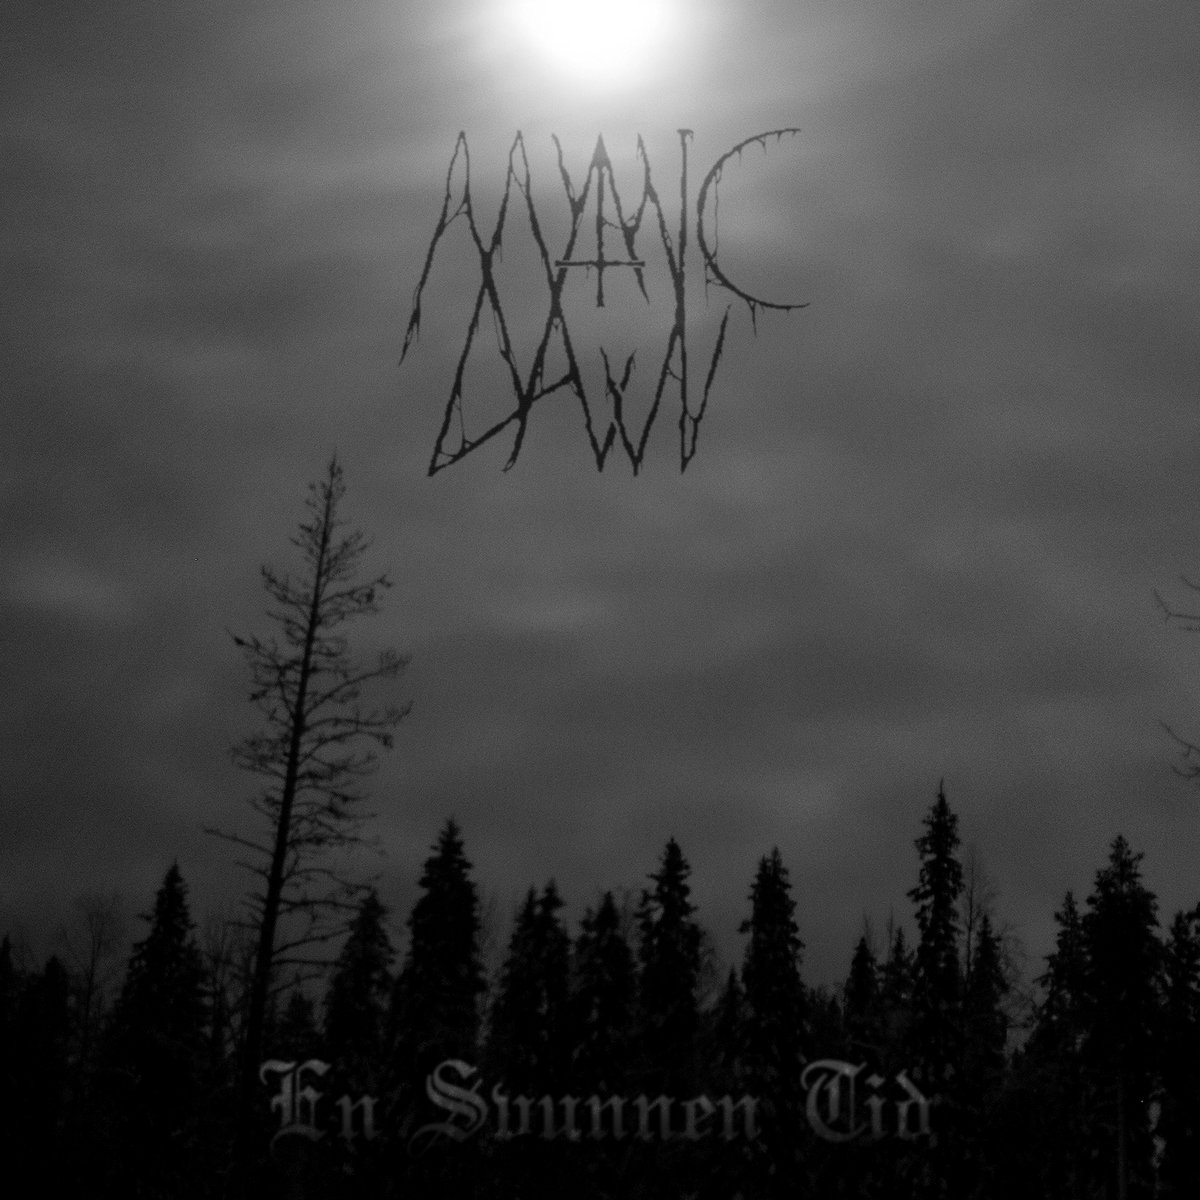 Mythic metals. Mythic Dawn Burzum. Mythic Band. Mythic soundcloud. The Dawn is your Enemy.